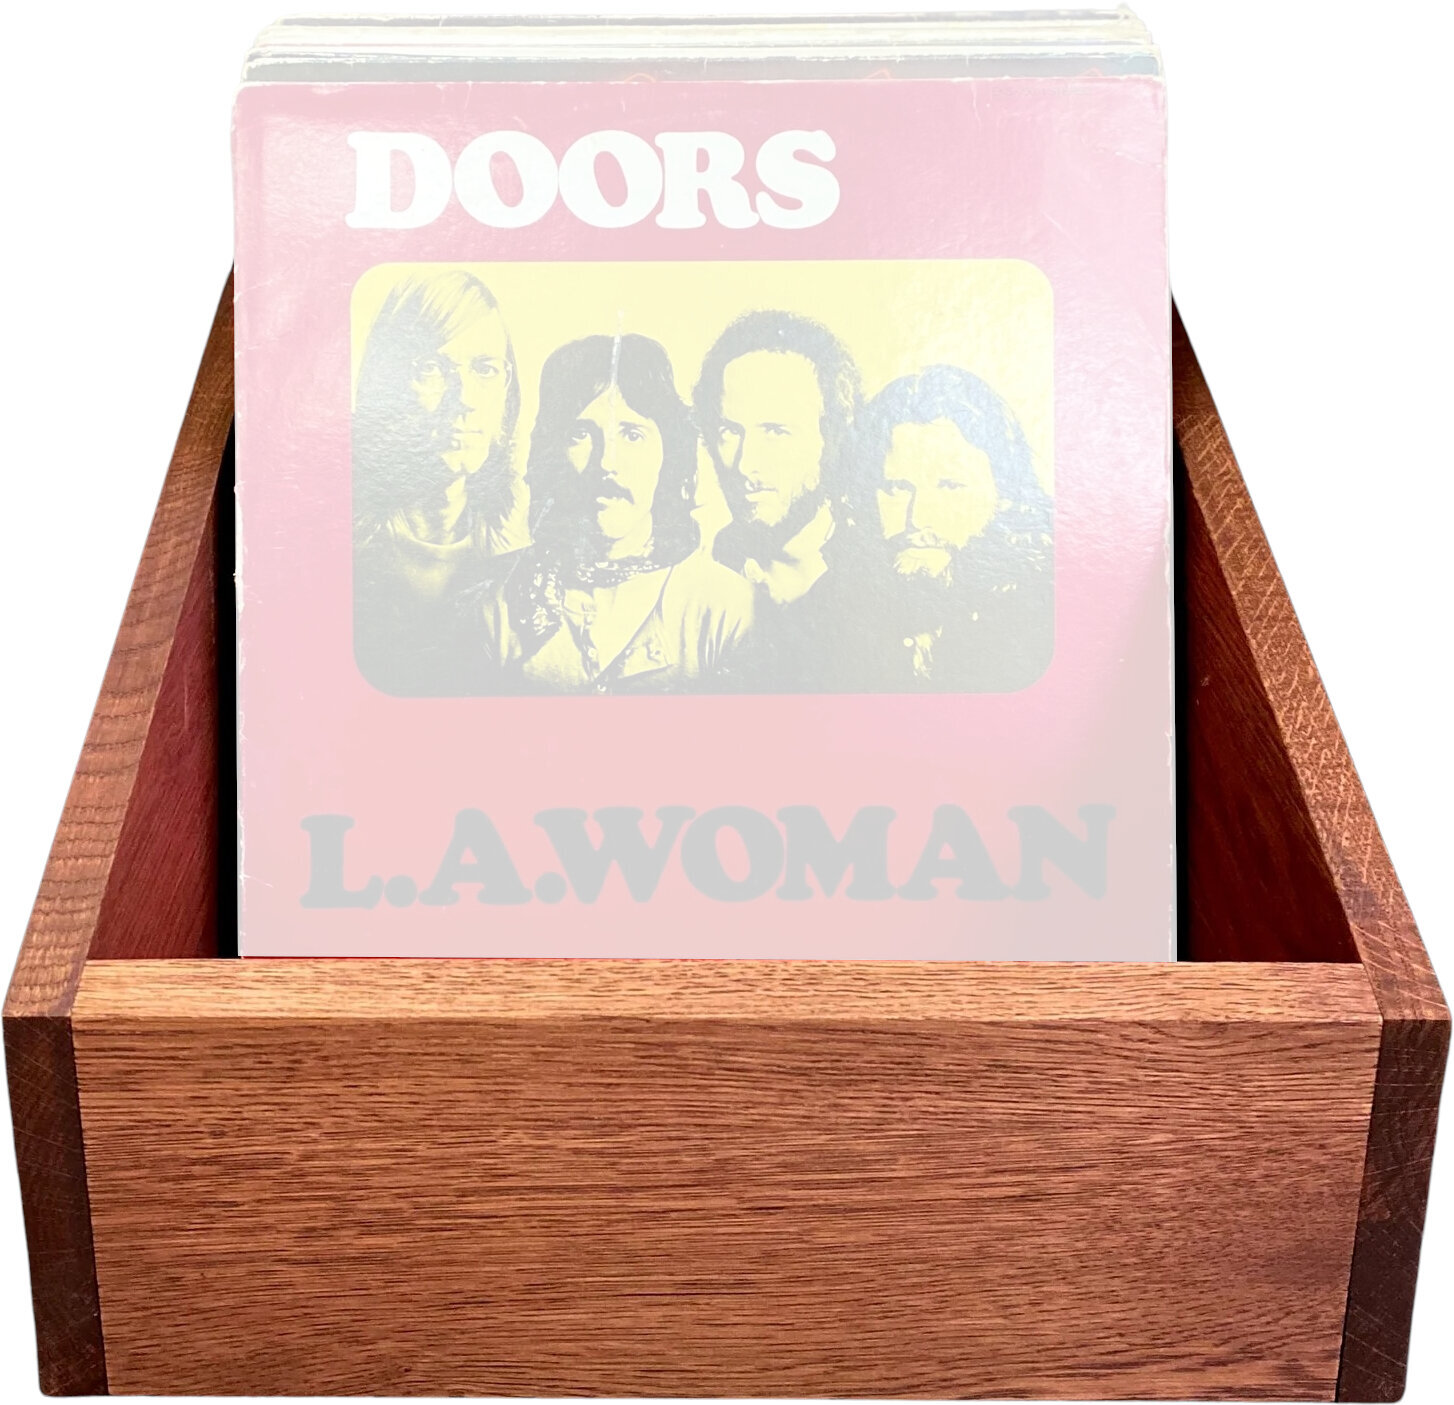 LP-doos Music Box Designs A Vulgar Display of Vinyl - 12 Inch Vinyl Storage Box, Whole Lotta Rosewood Box LP-doos